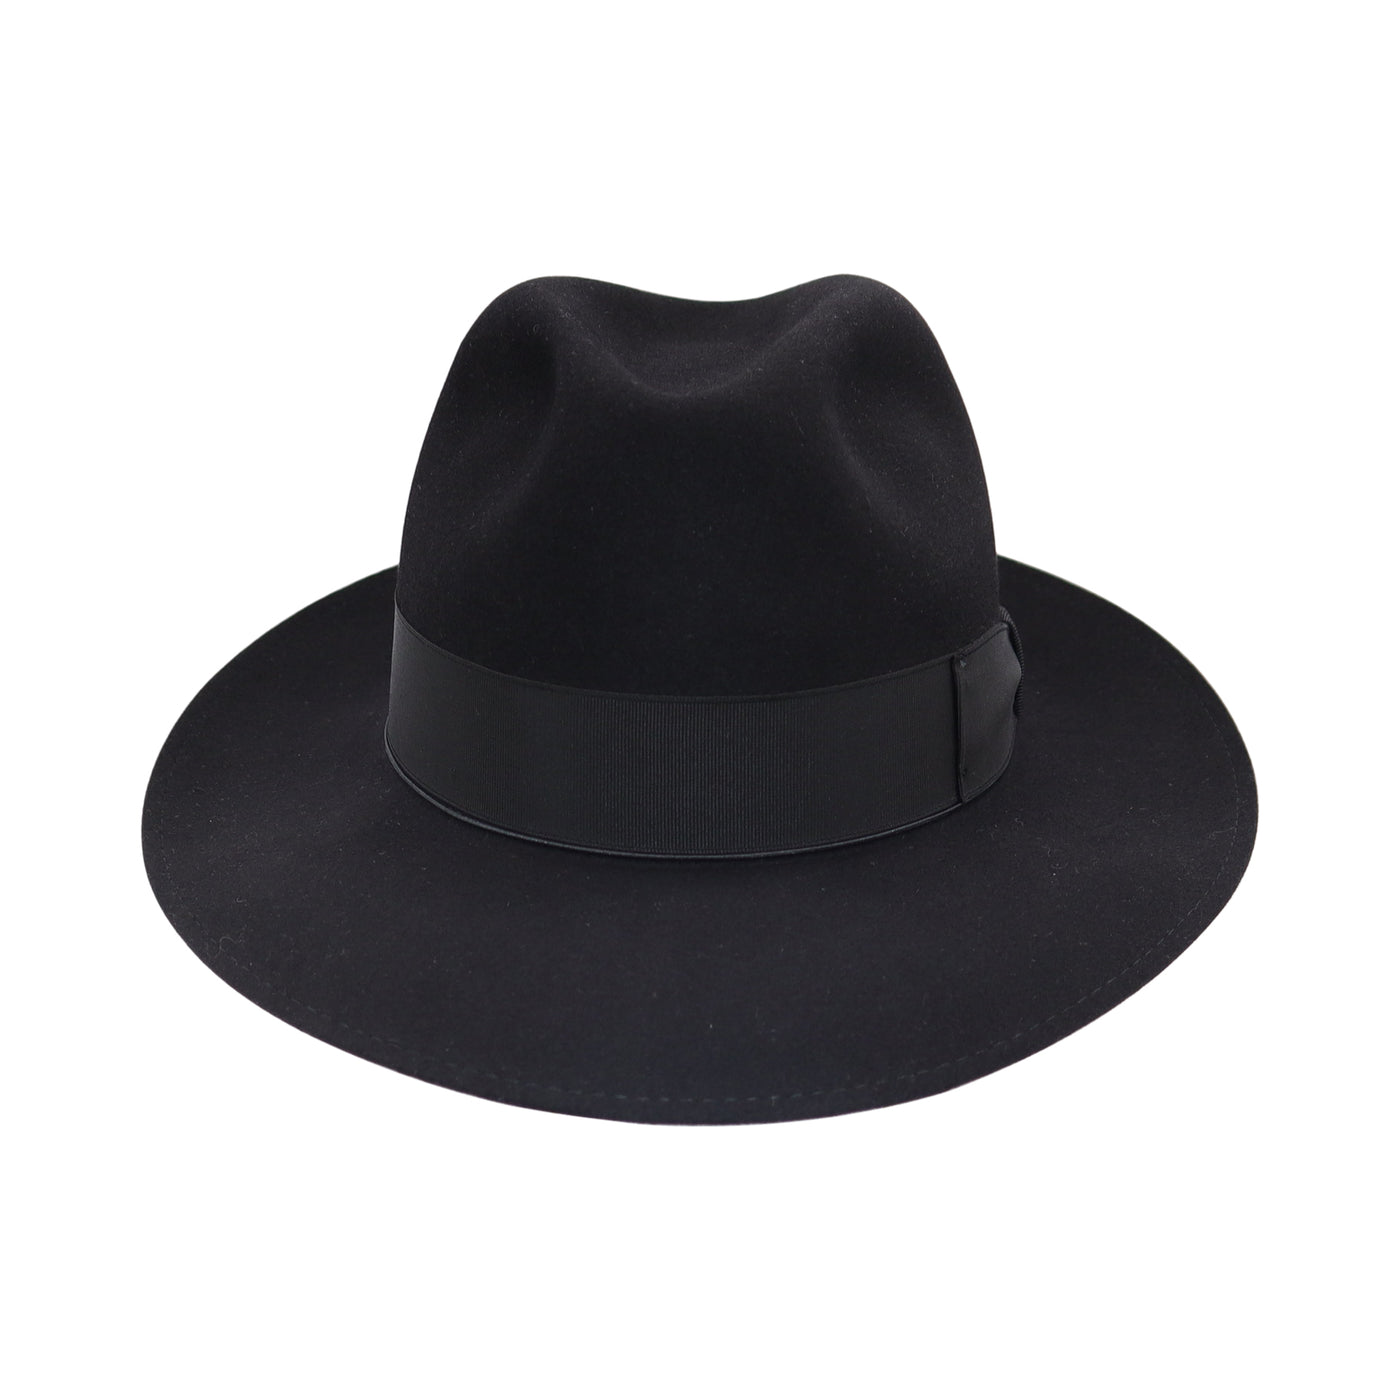 Andelli 258, product_type] - Borsalino for Atica fedora hat